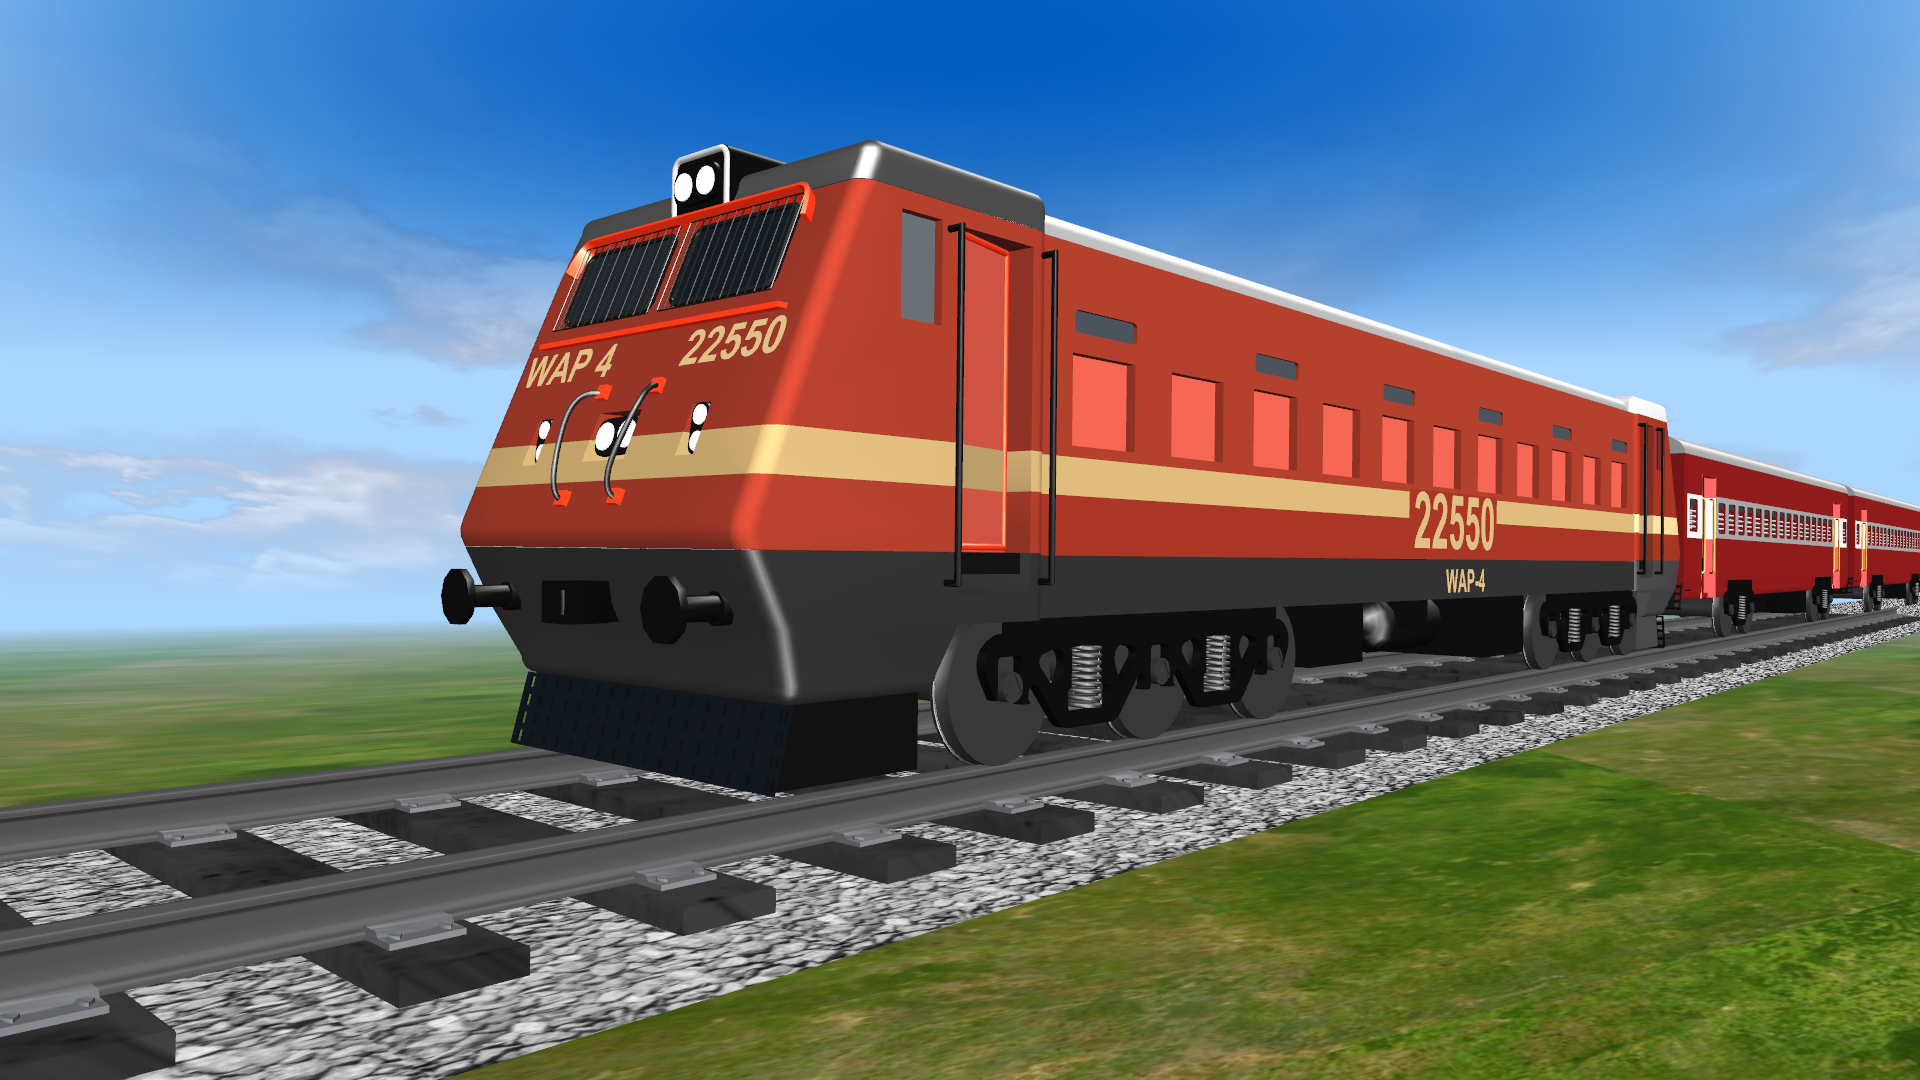 3d Train Wallpaper - Indian Train 3d Model , HD Wallpaper & Backgrounds